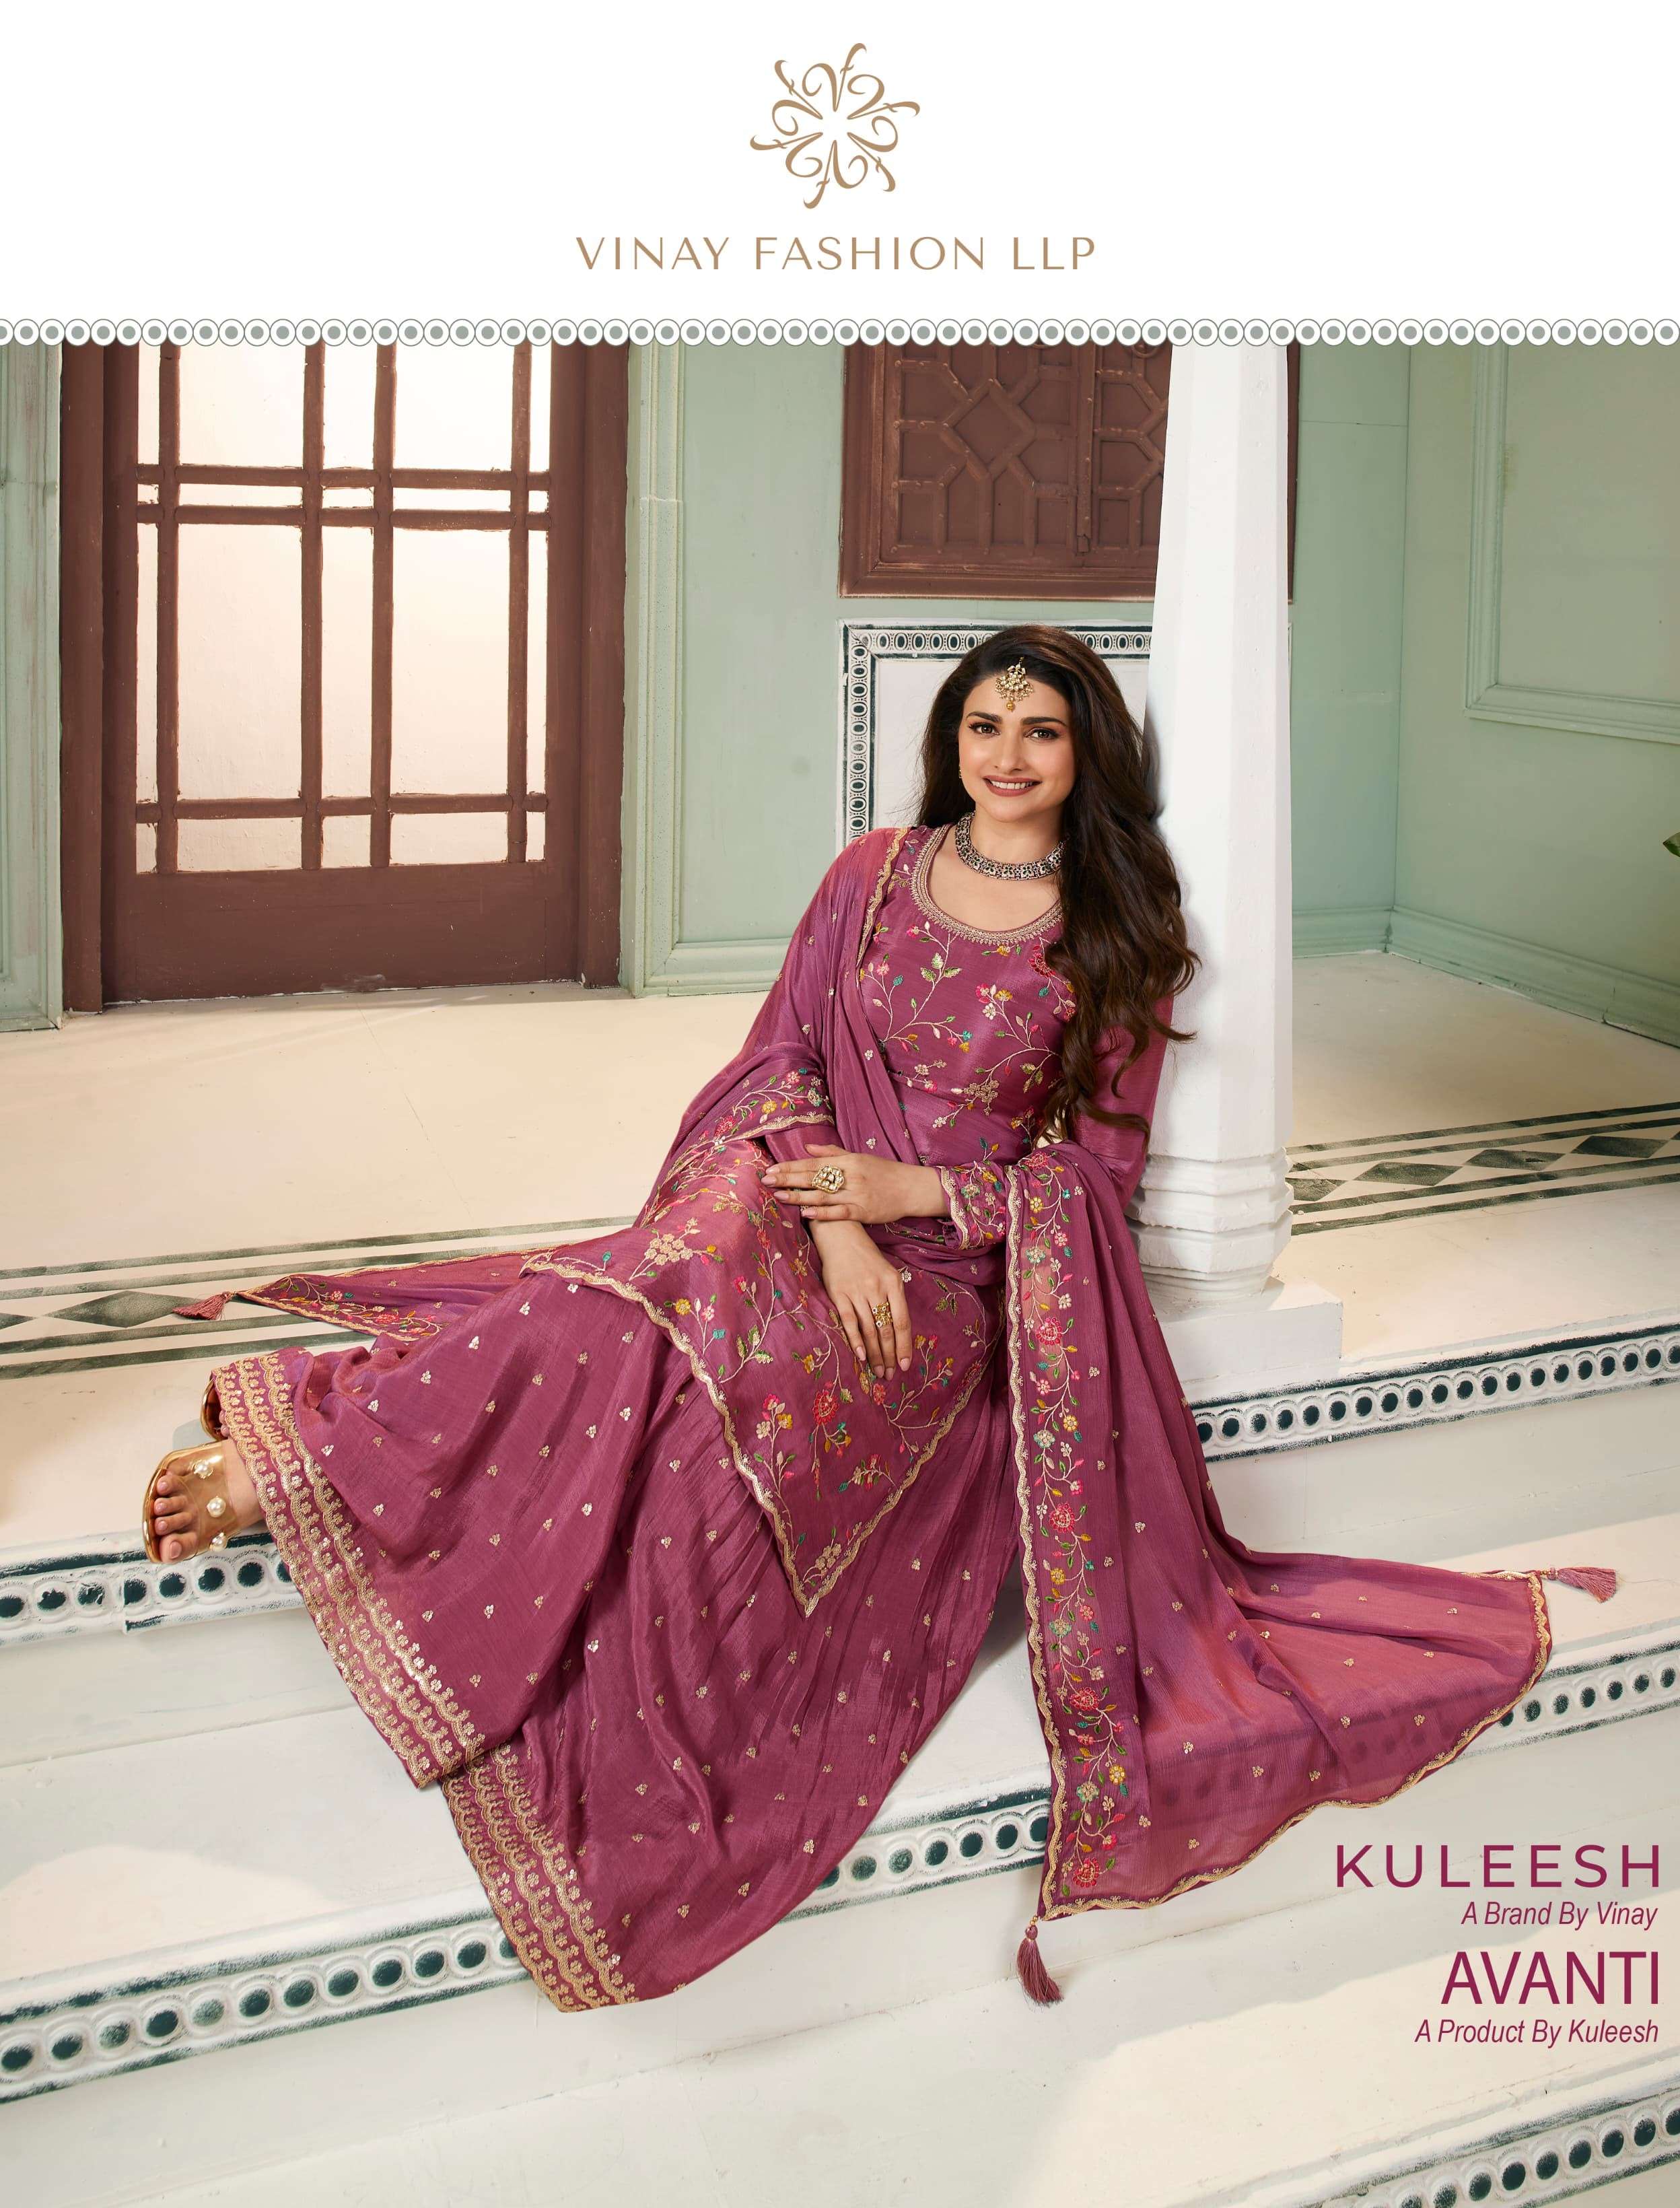 Vinay Fashion Kuleesh Avanti Wedding Wear Dress Catalog Exporters